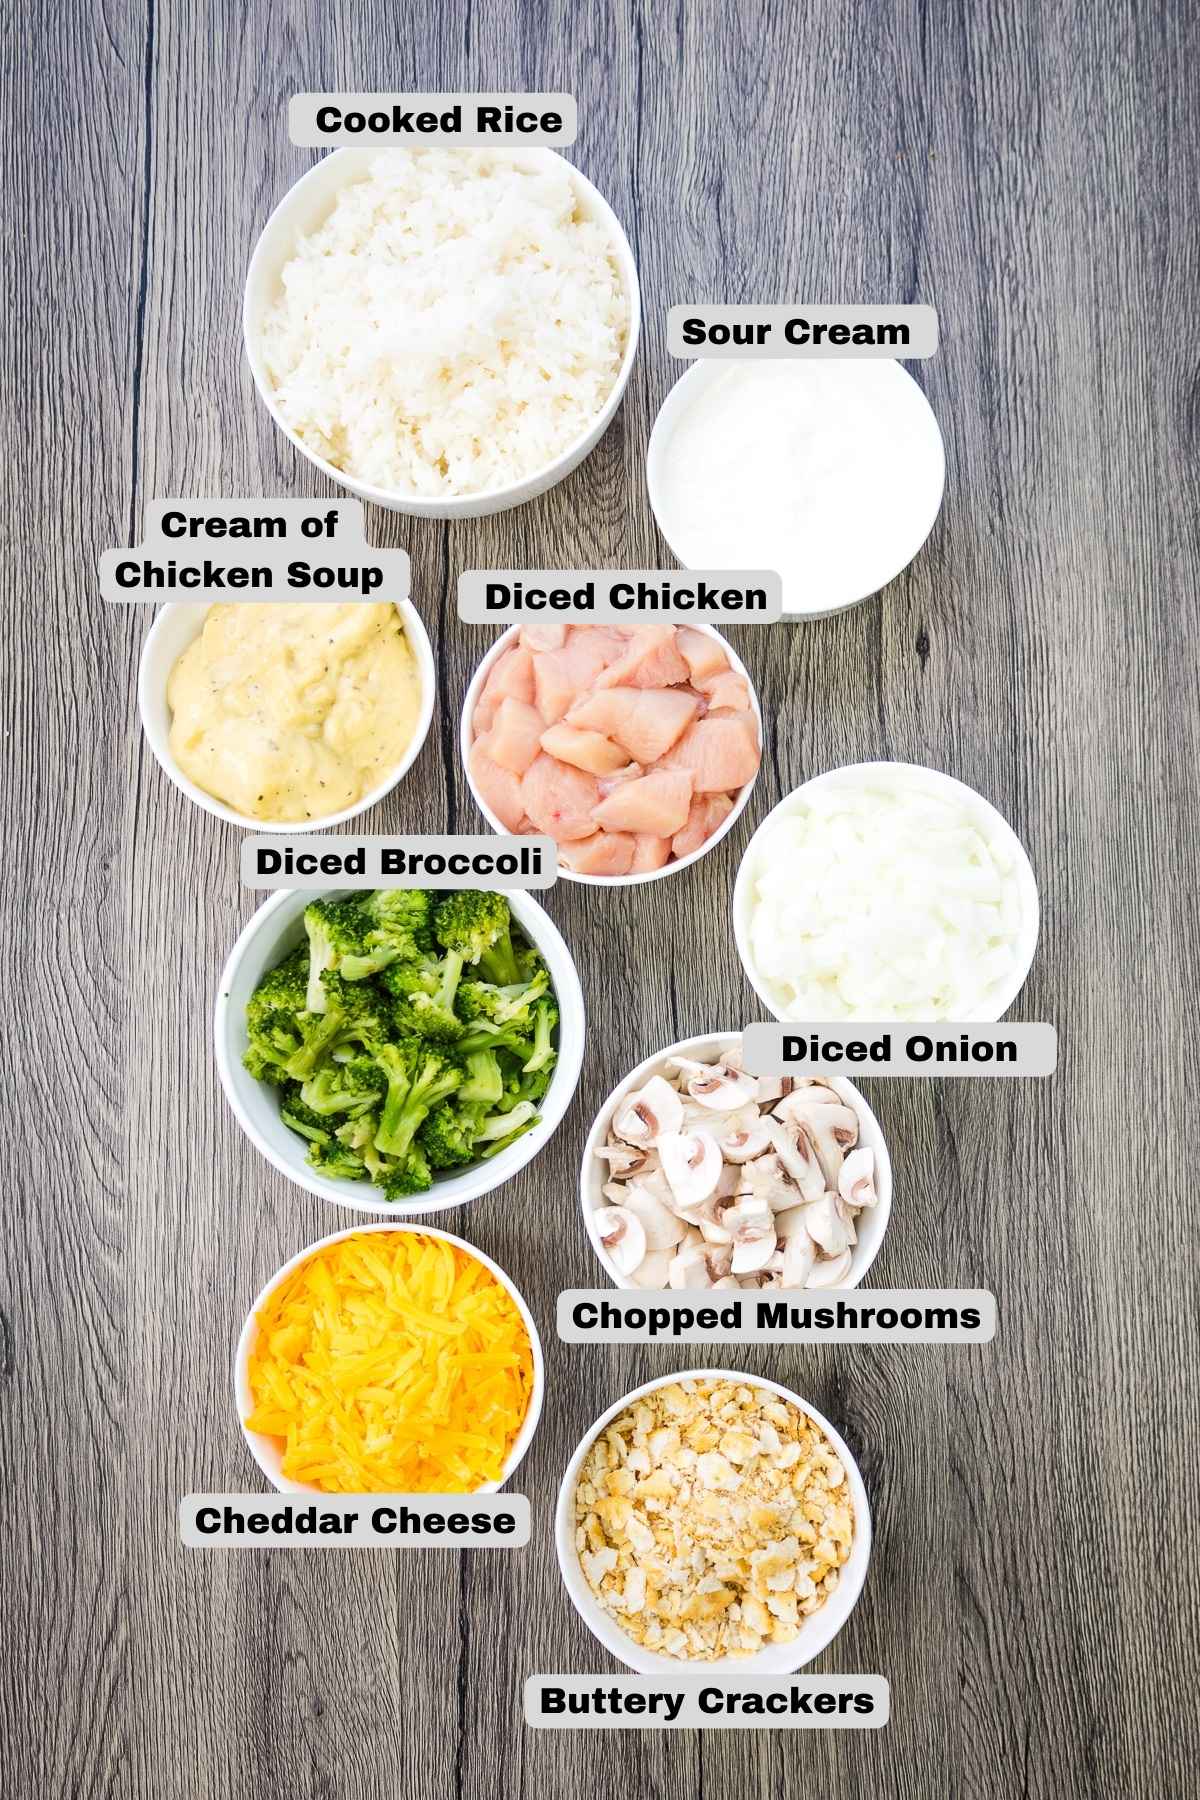 Ingredients for Chicken Broccoli Rice Casserole recipe.